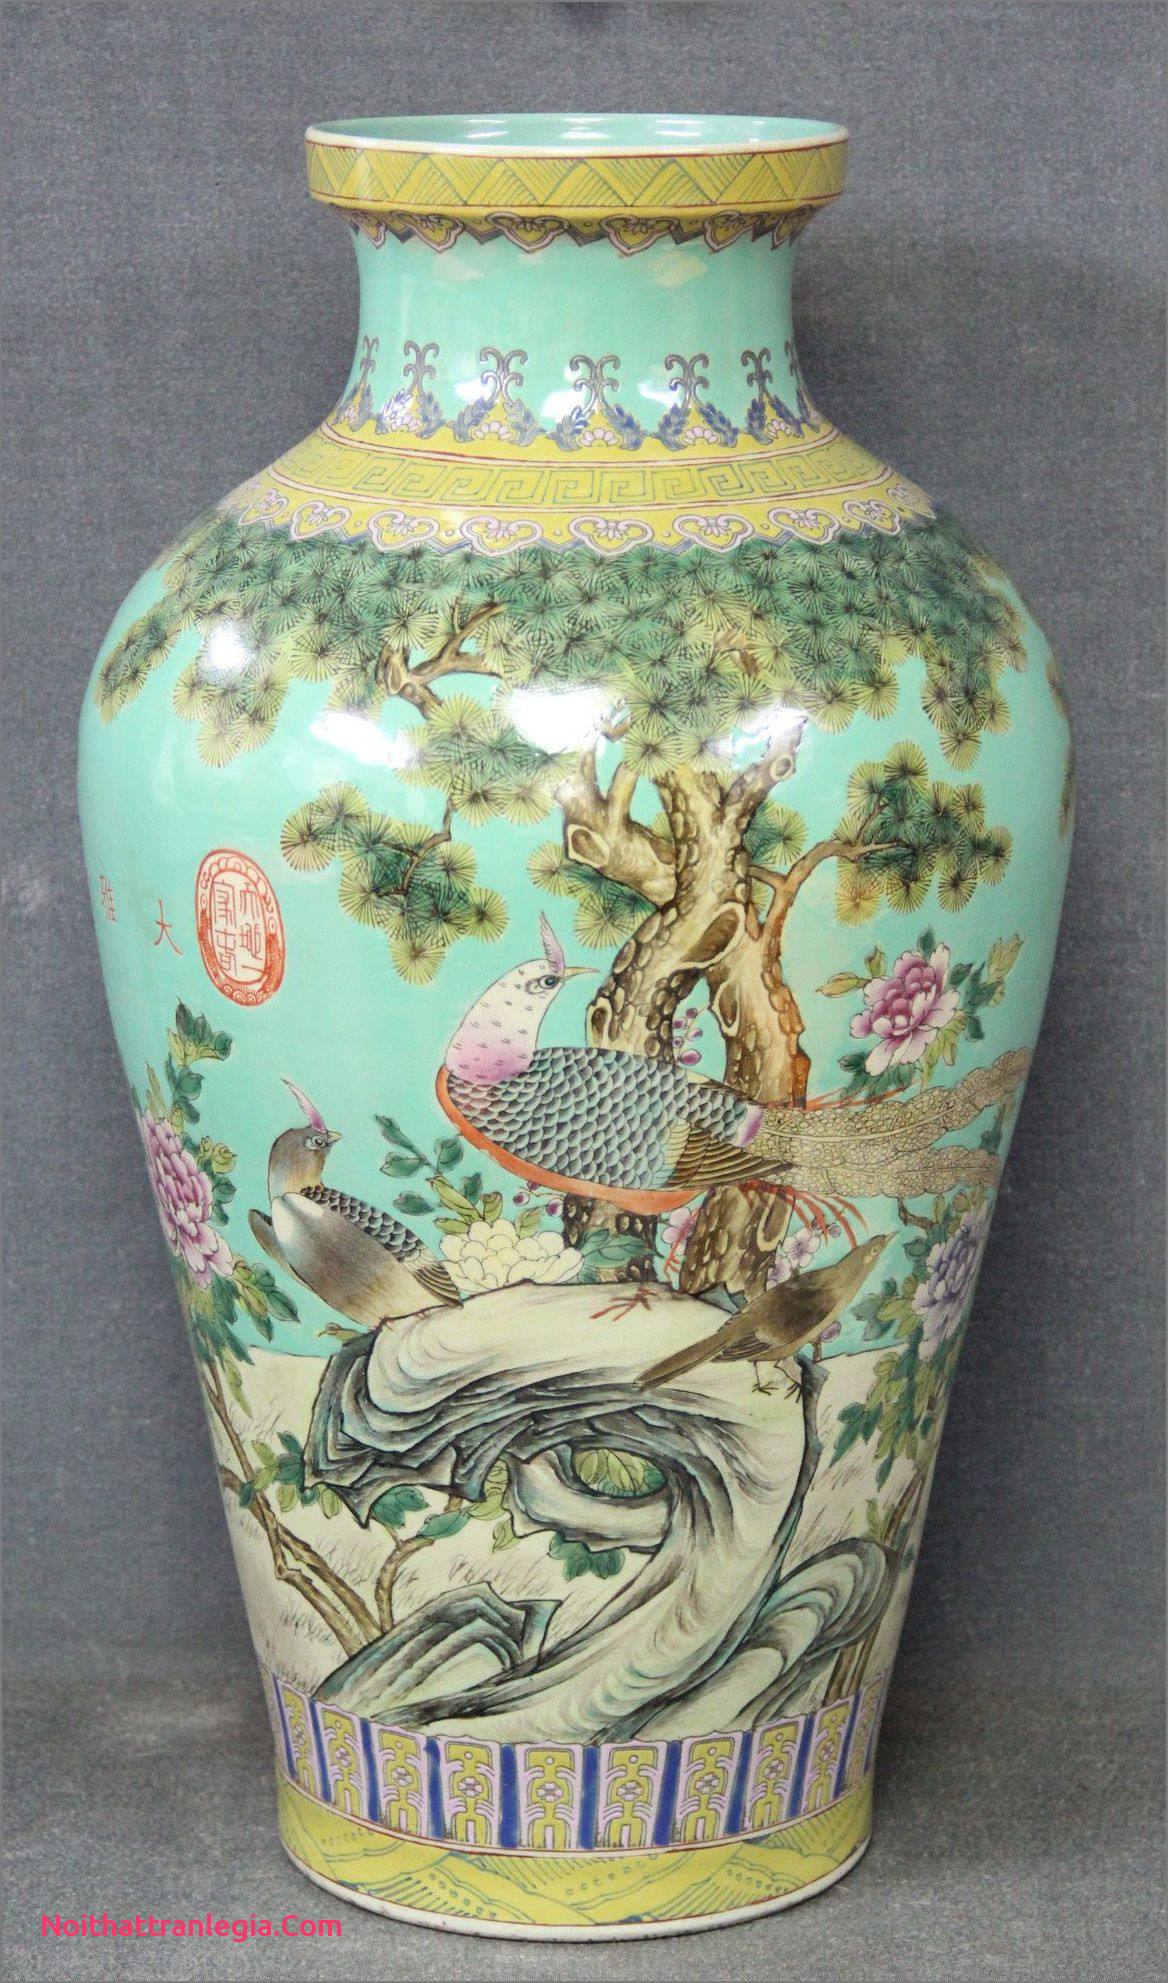 20 Elegant Waterford Crystal Vase Markings 2024 free download waterford crystal vase markings of 20 chinese antique vase noithattranlegia vases design throughout antique vase